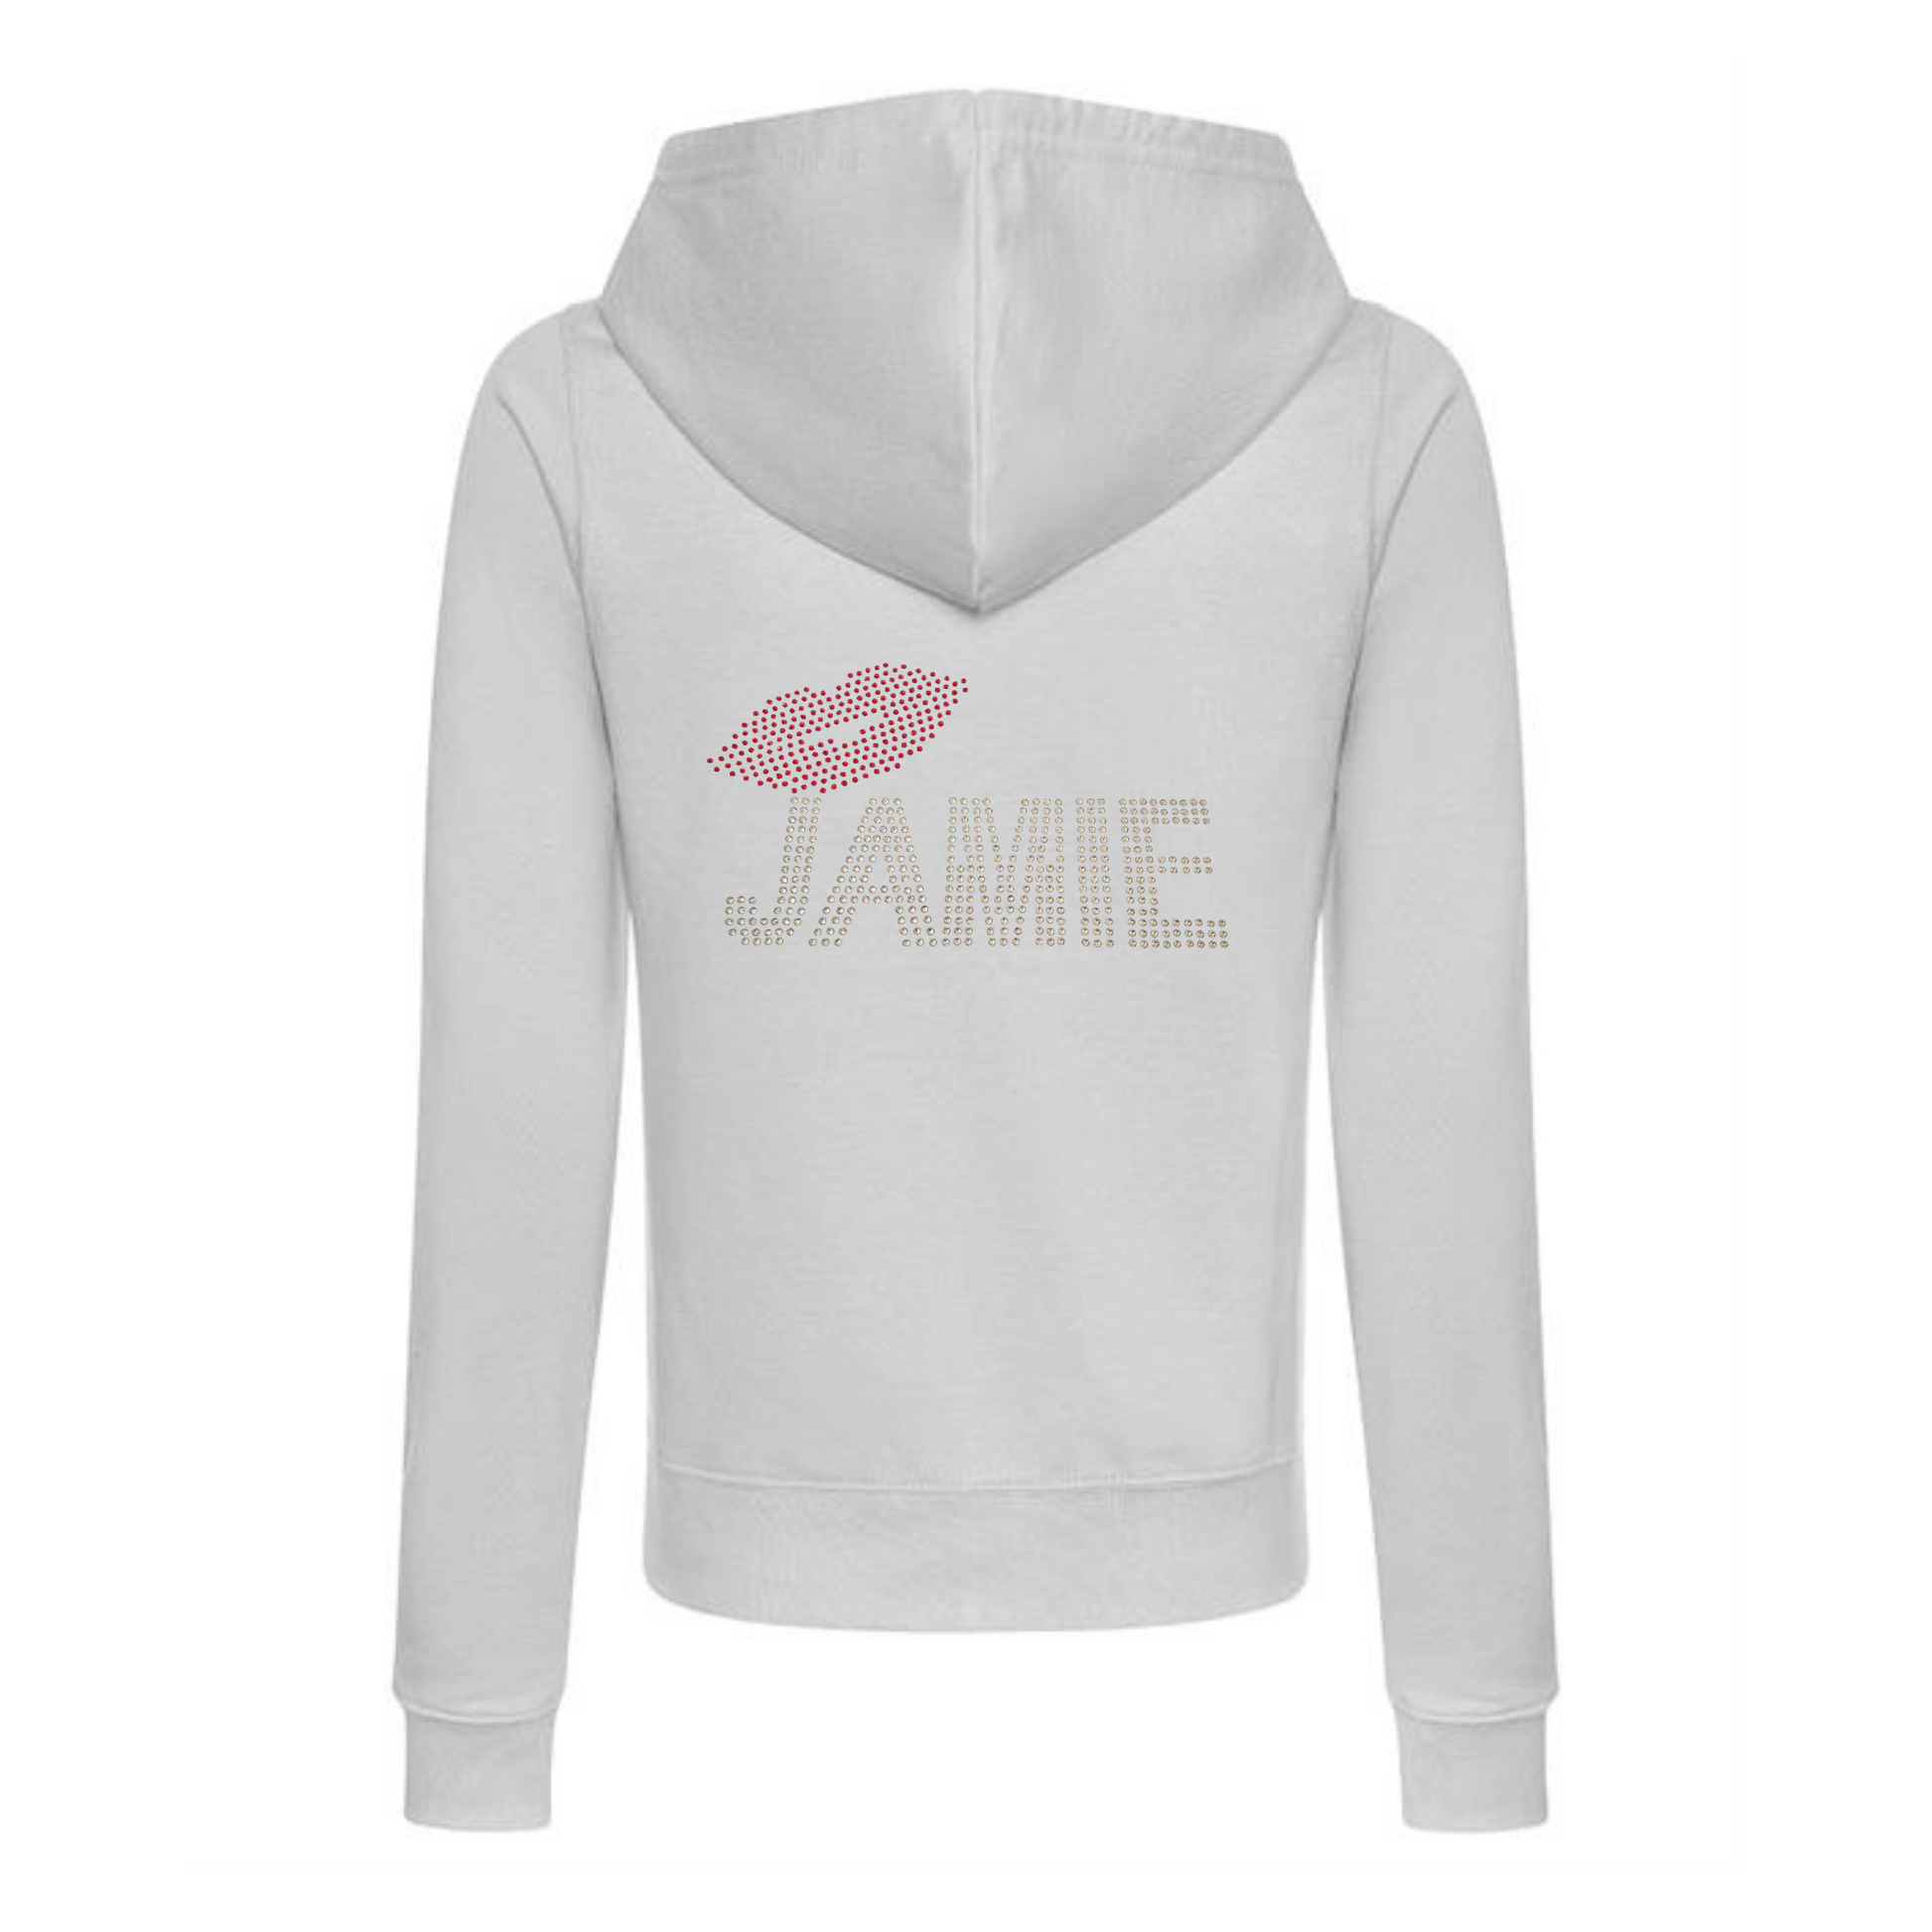 Gray zip up hoodie with silver rhinestones detailing Jamie and red rhinestones lips, very sparkly